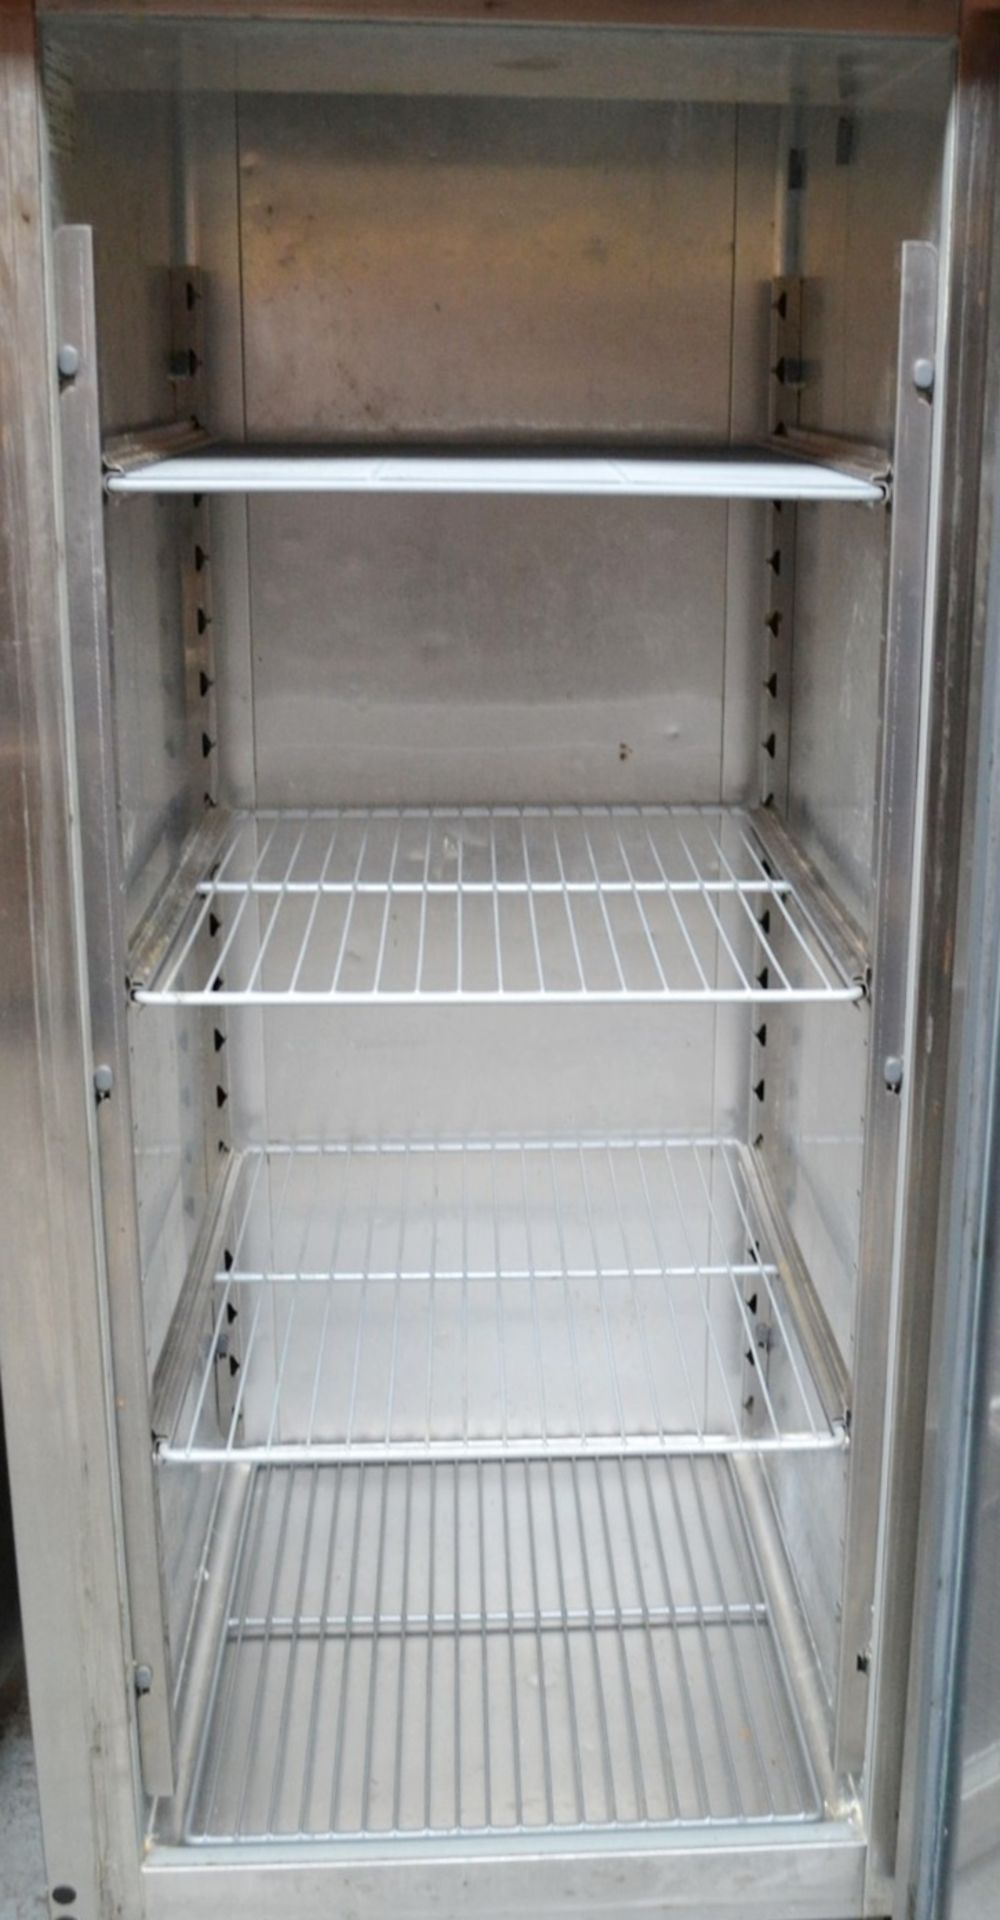 1 x Williams Stainless Steel Single Door Upright Freezer - Model: LJ1SARI - 400 Litre - W74 x 82 x - Image 2 of 5